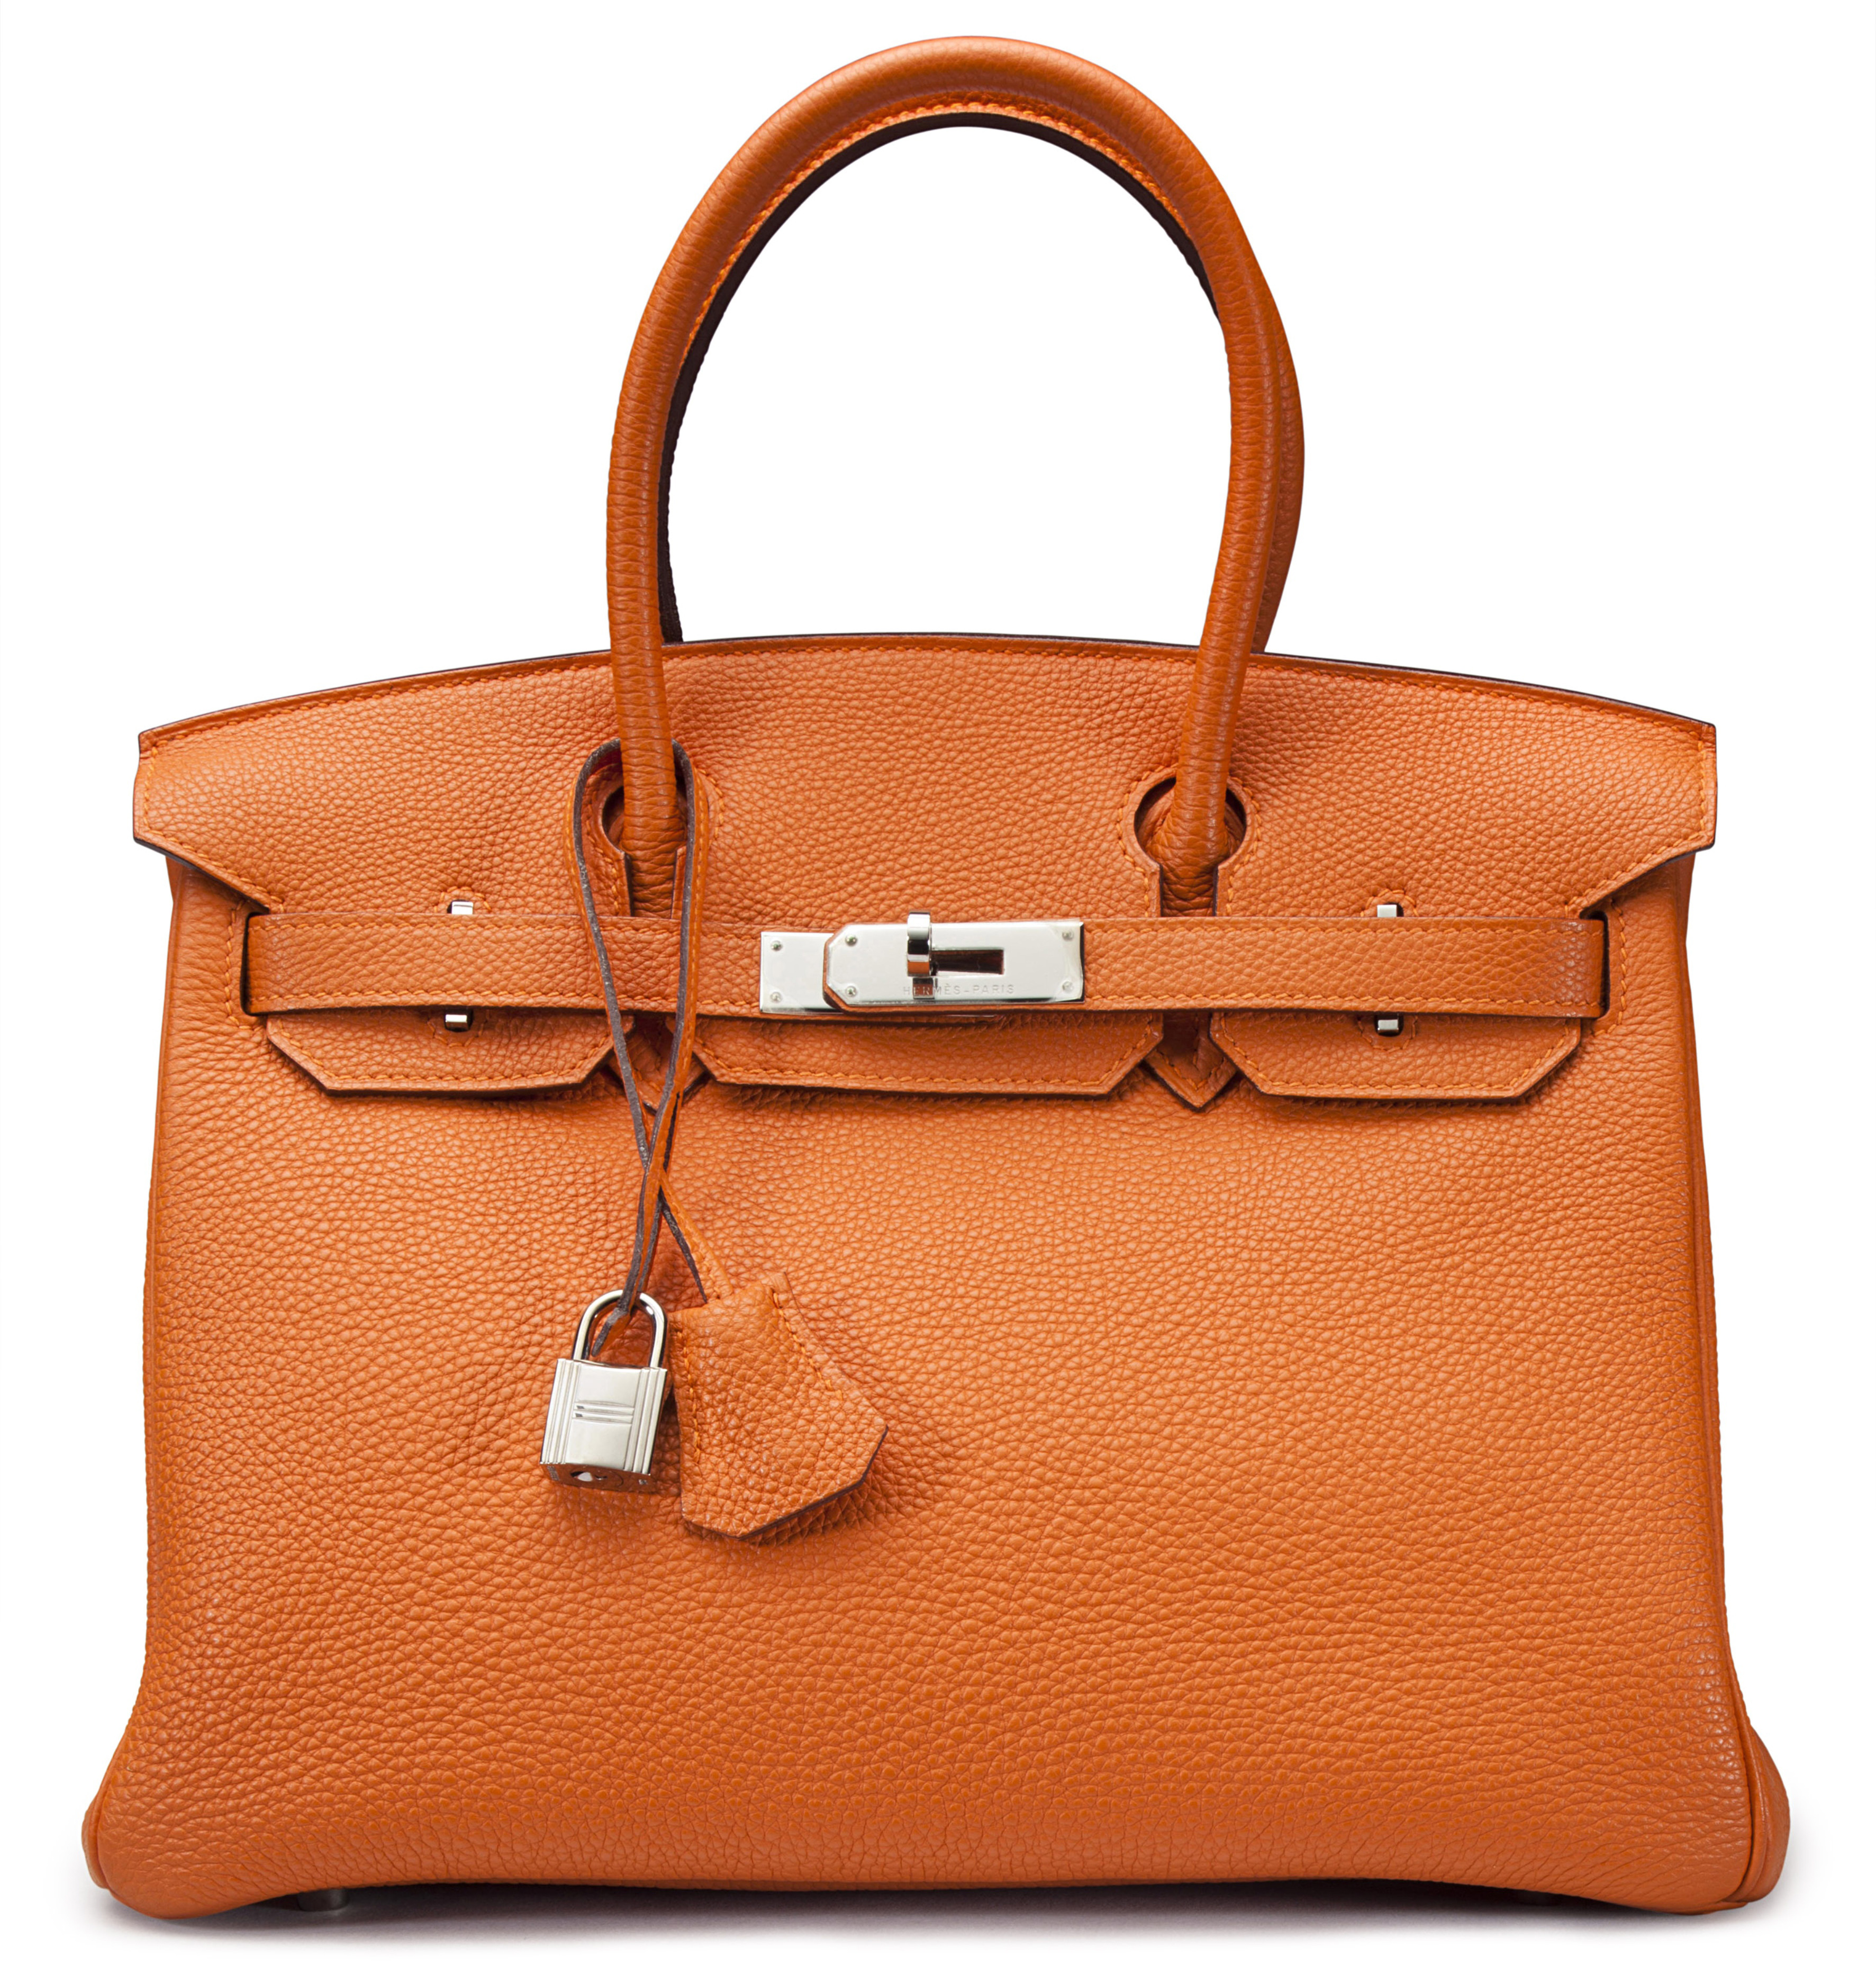 Hermes Birkin Bag, More Than Just a Bag | www.semadata.org